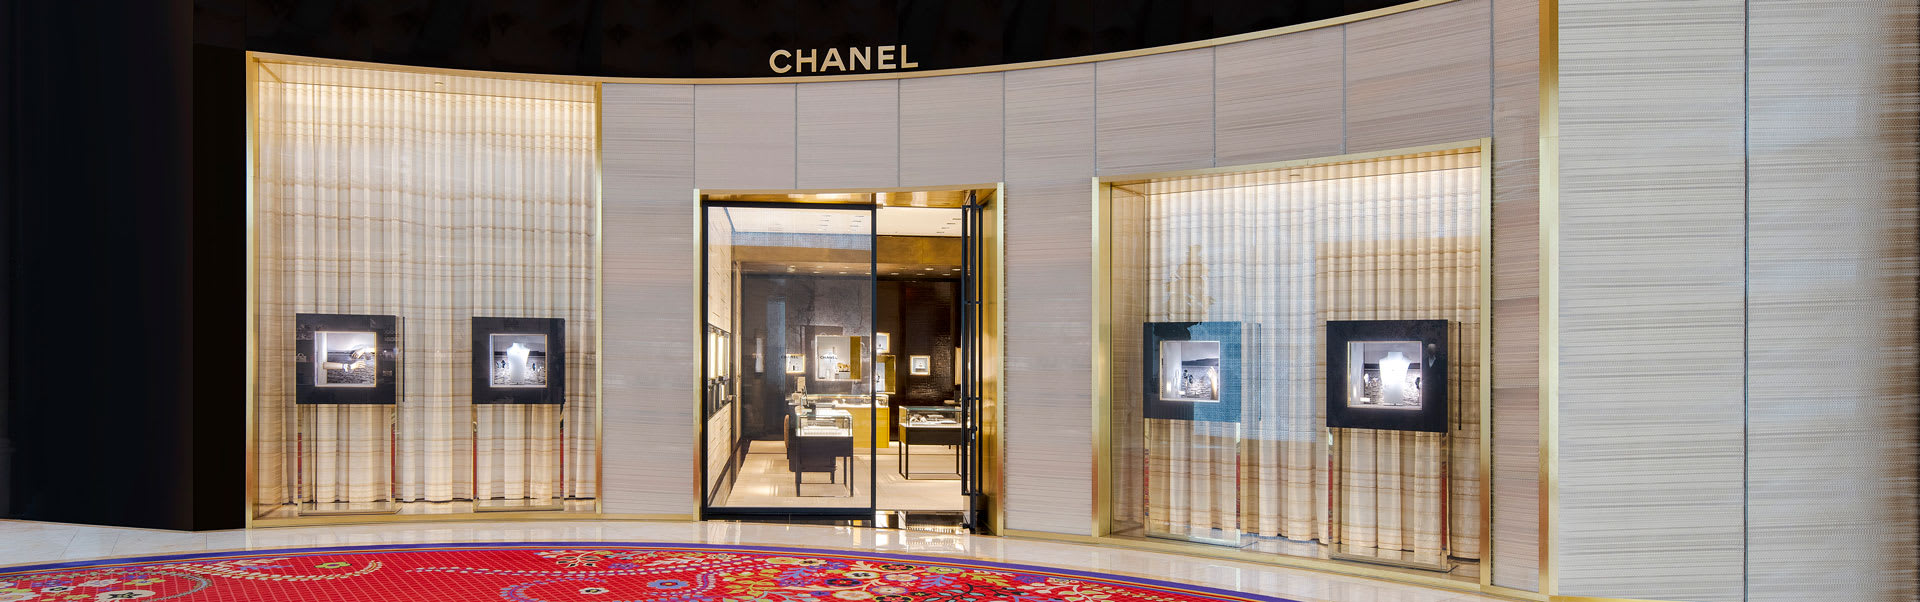 Omnicom bags Chanel in global media pitch win